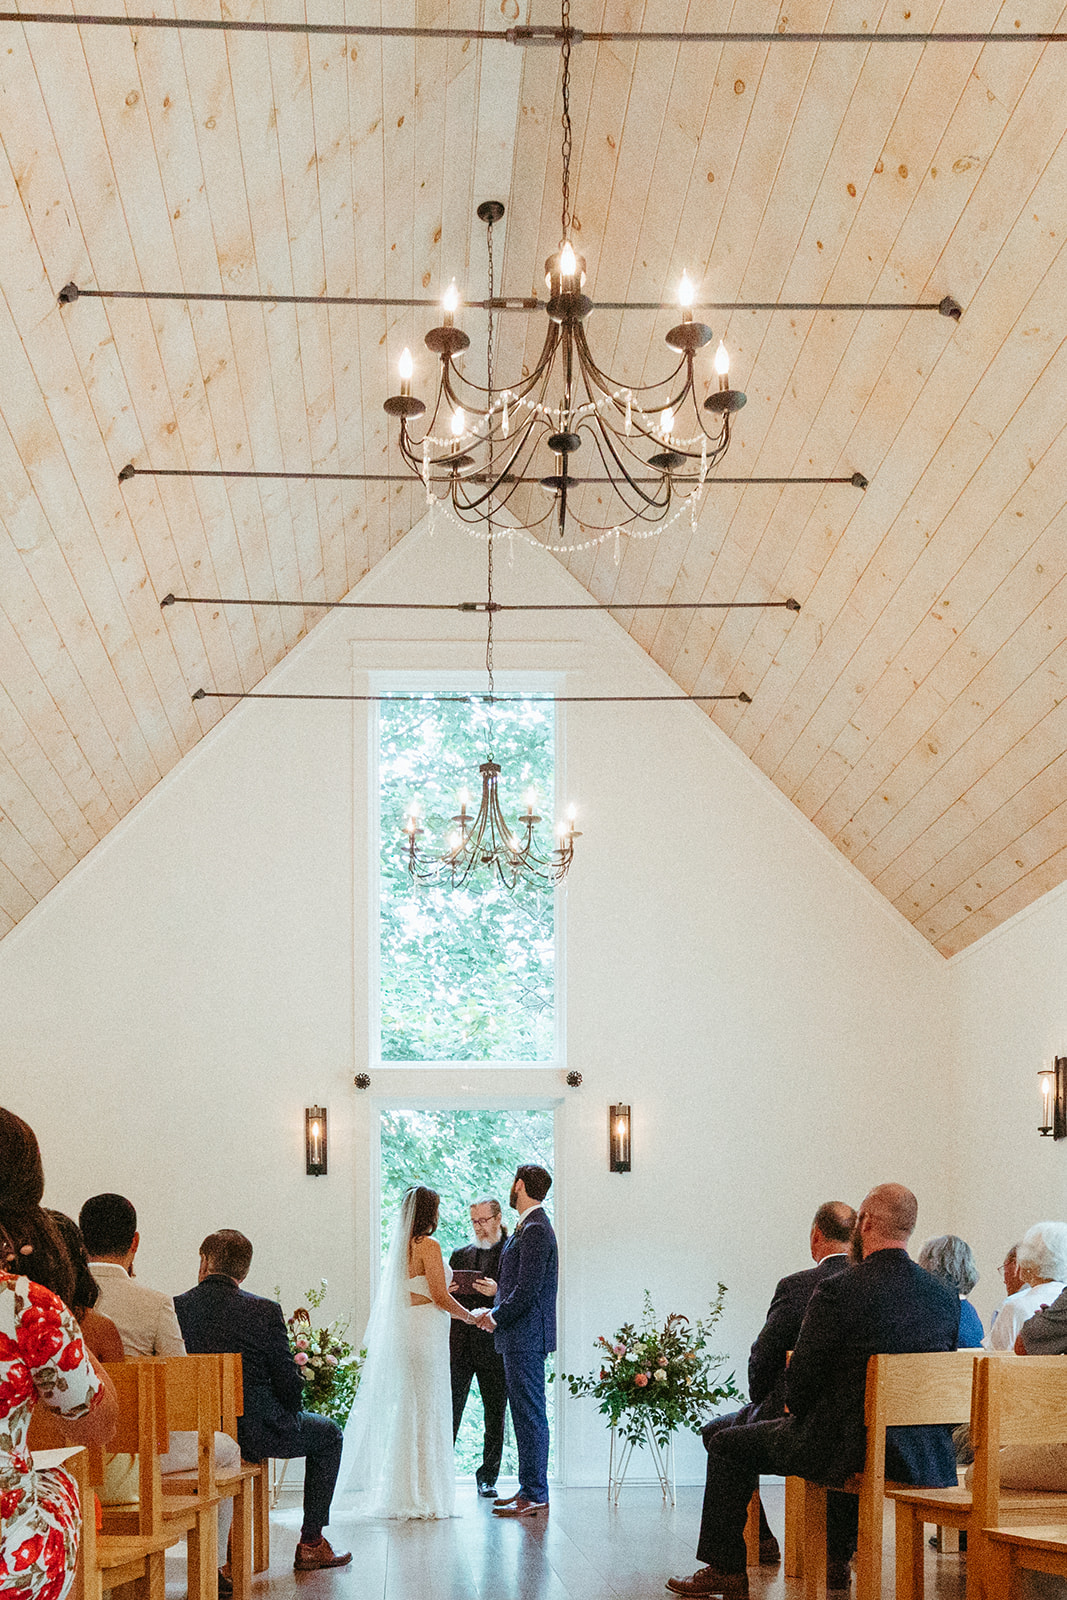 The wedding ceremony held at Juliette Chapel in Dahlonega, Georgia.
